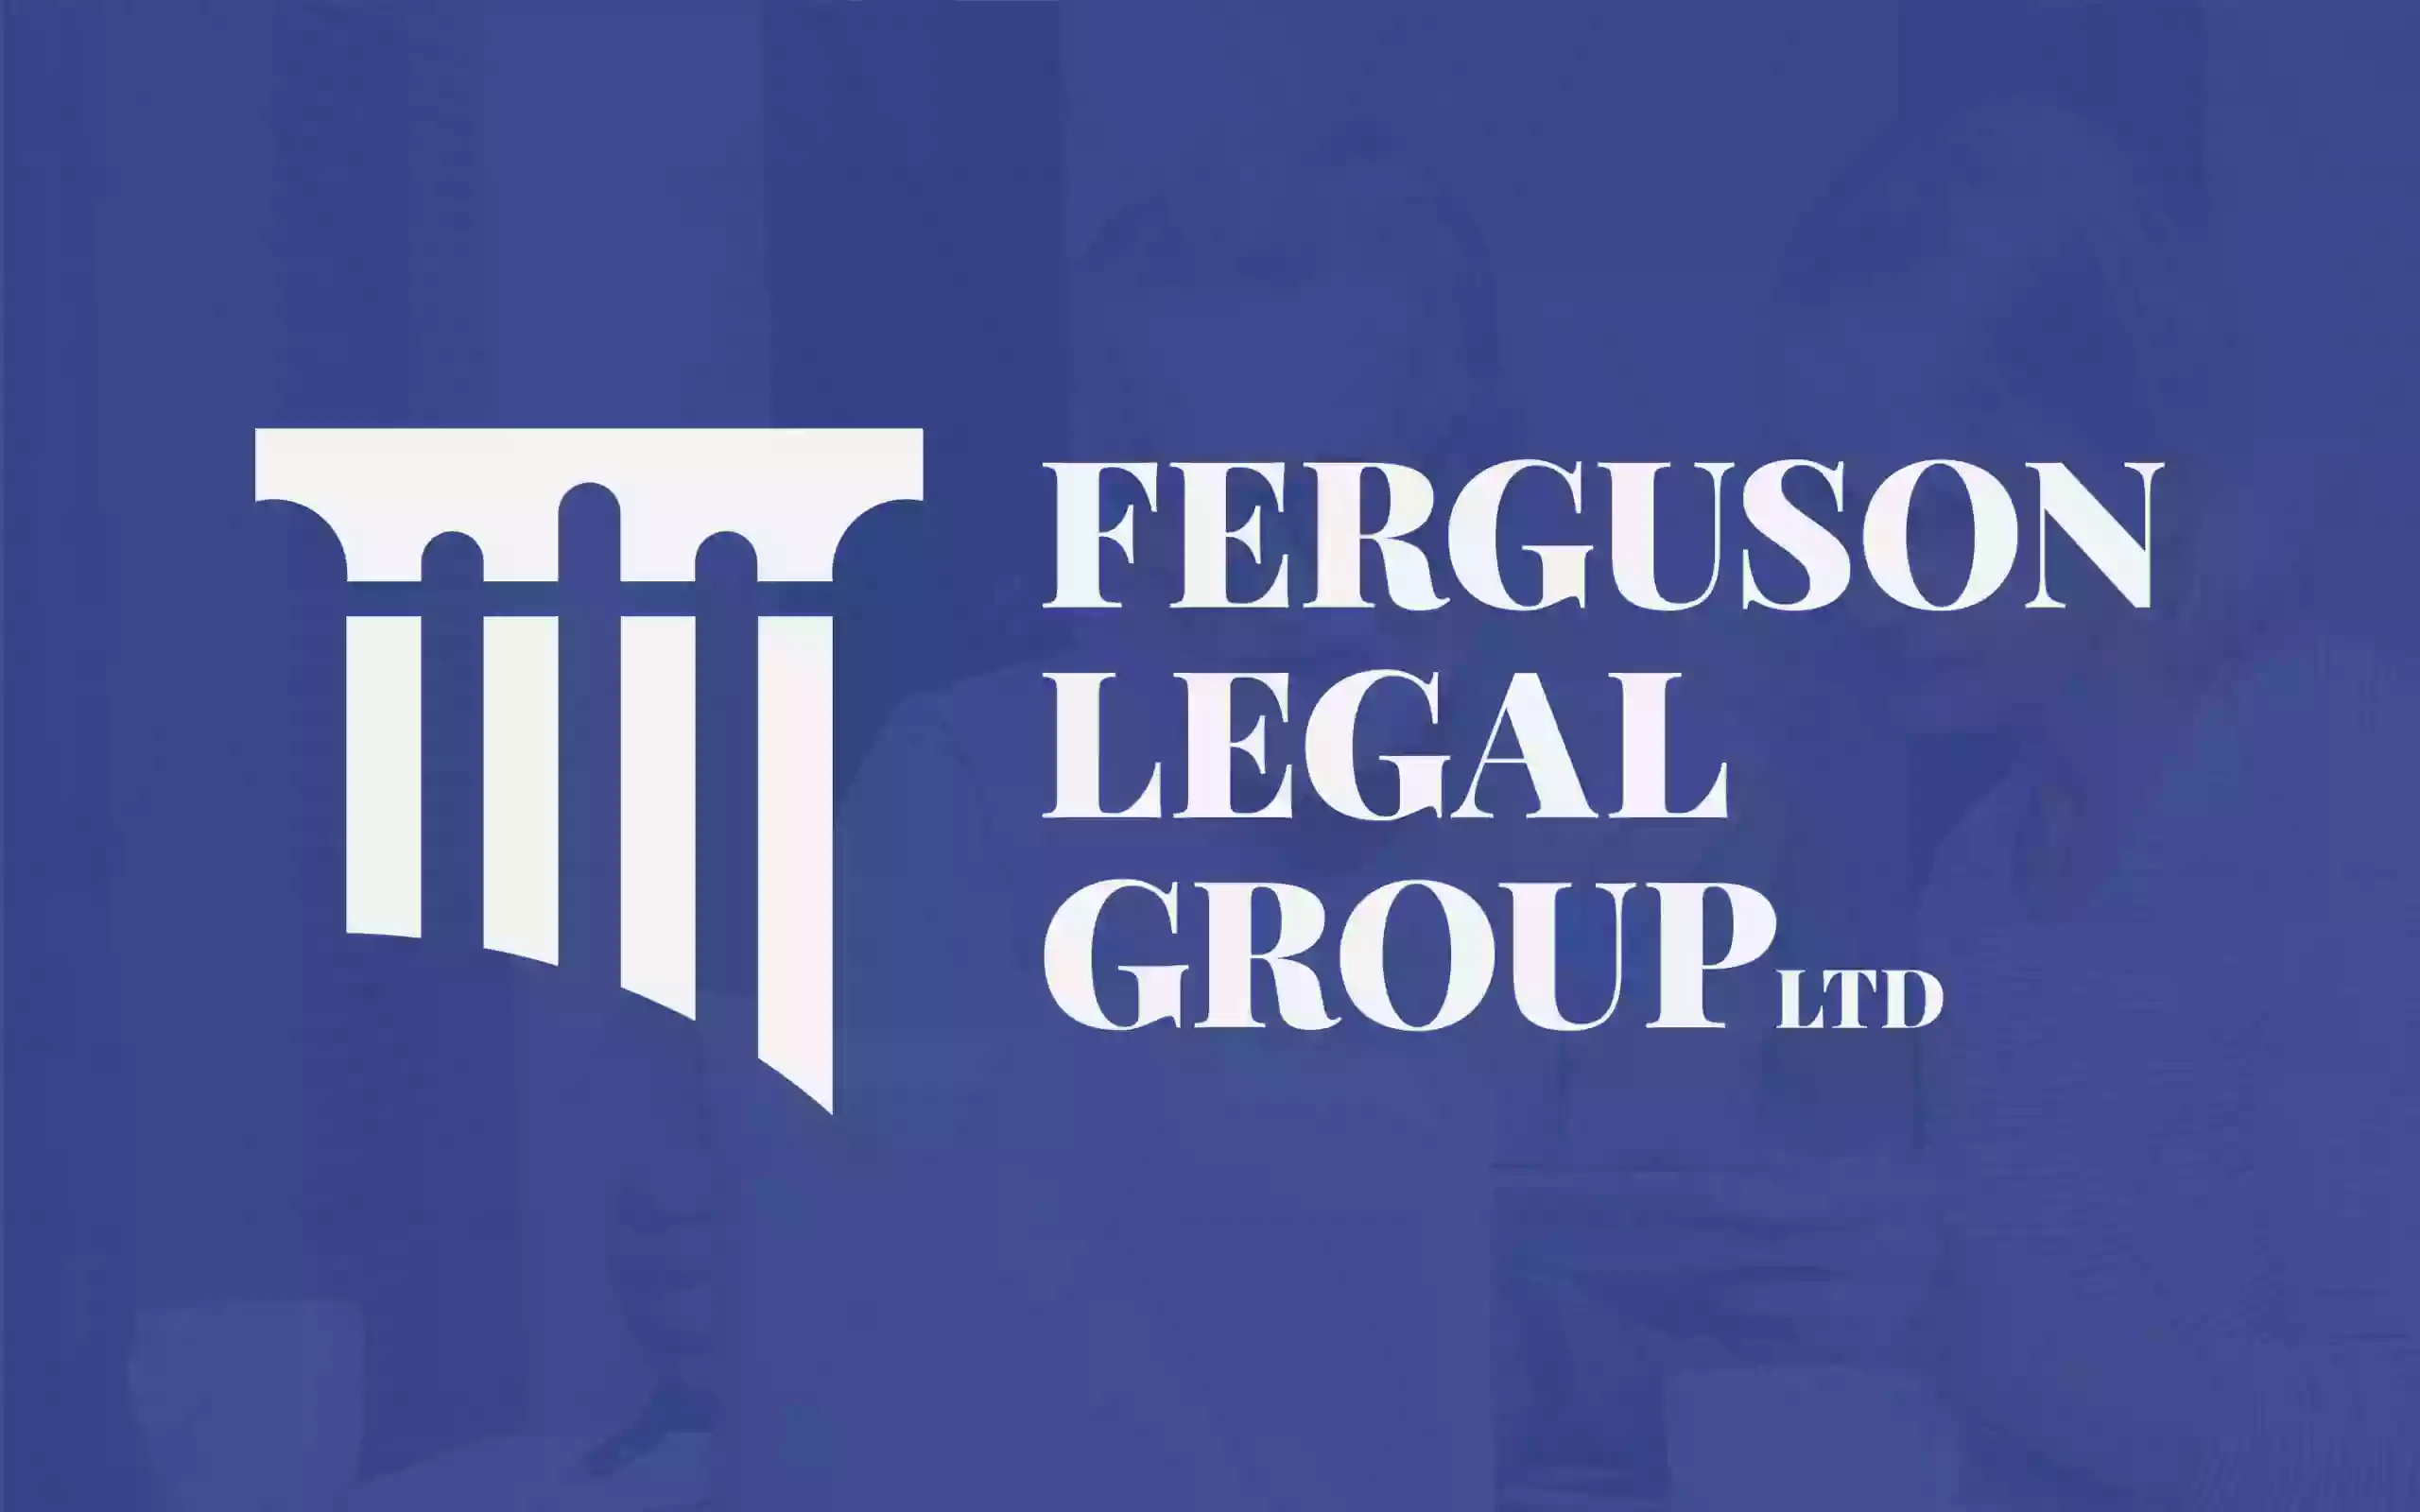 Ferguson Legal Group LTD